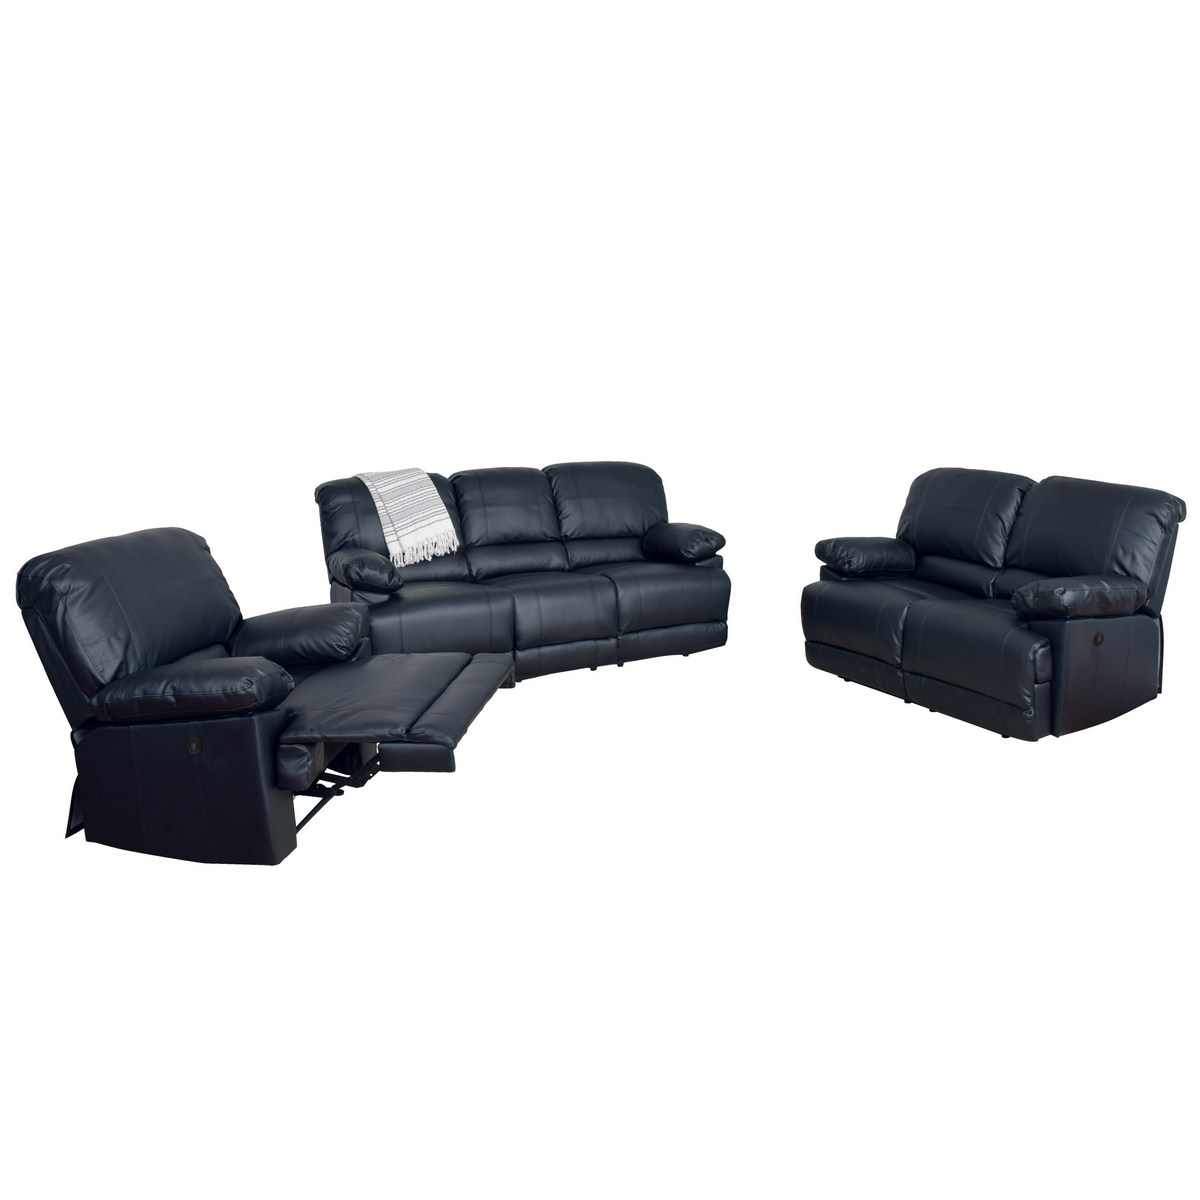 Recline | Leather | Power | Chair | Black | Bond | Sofa | Set